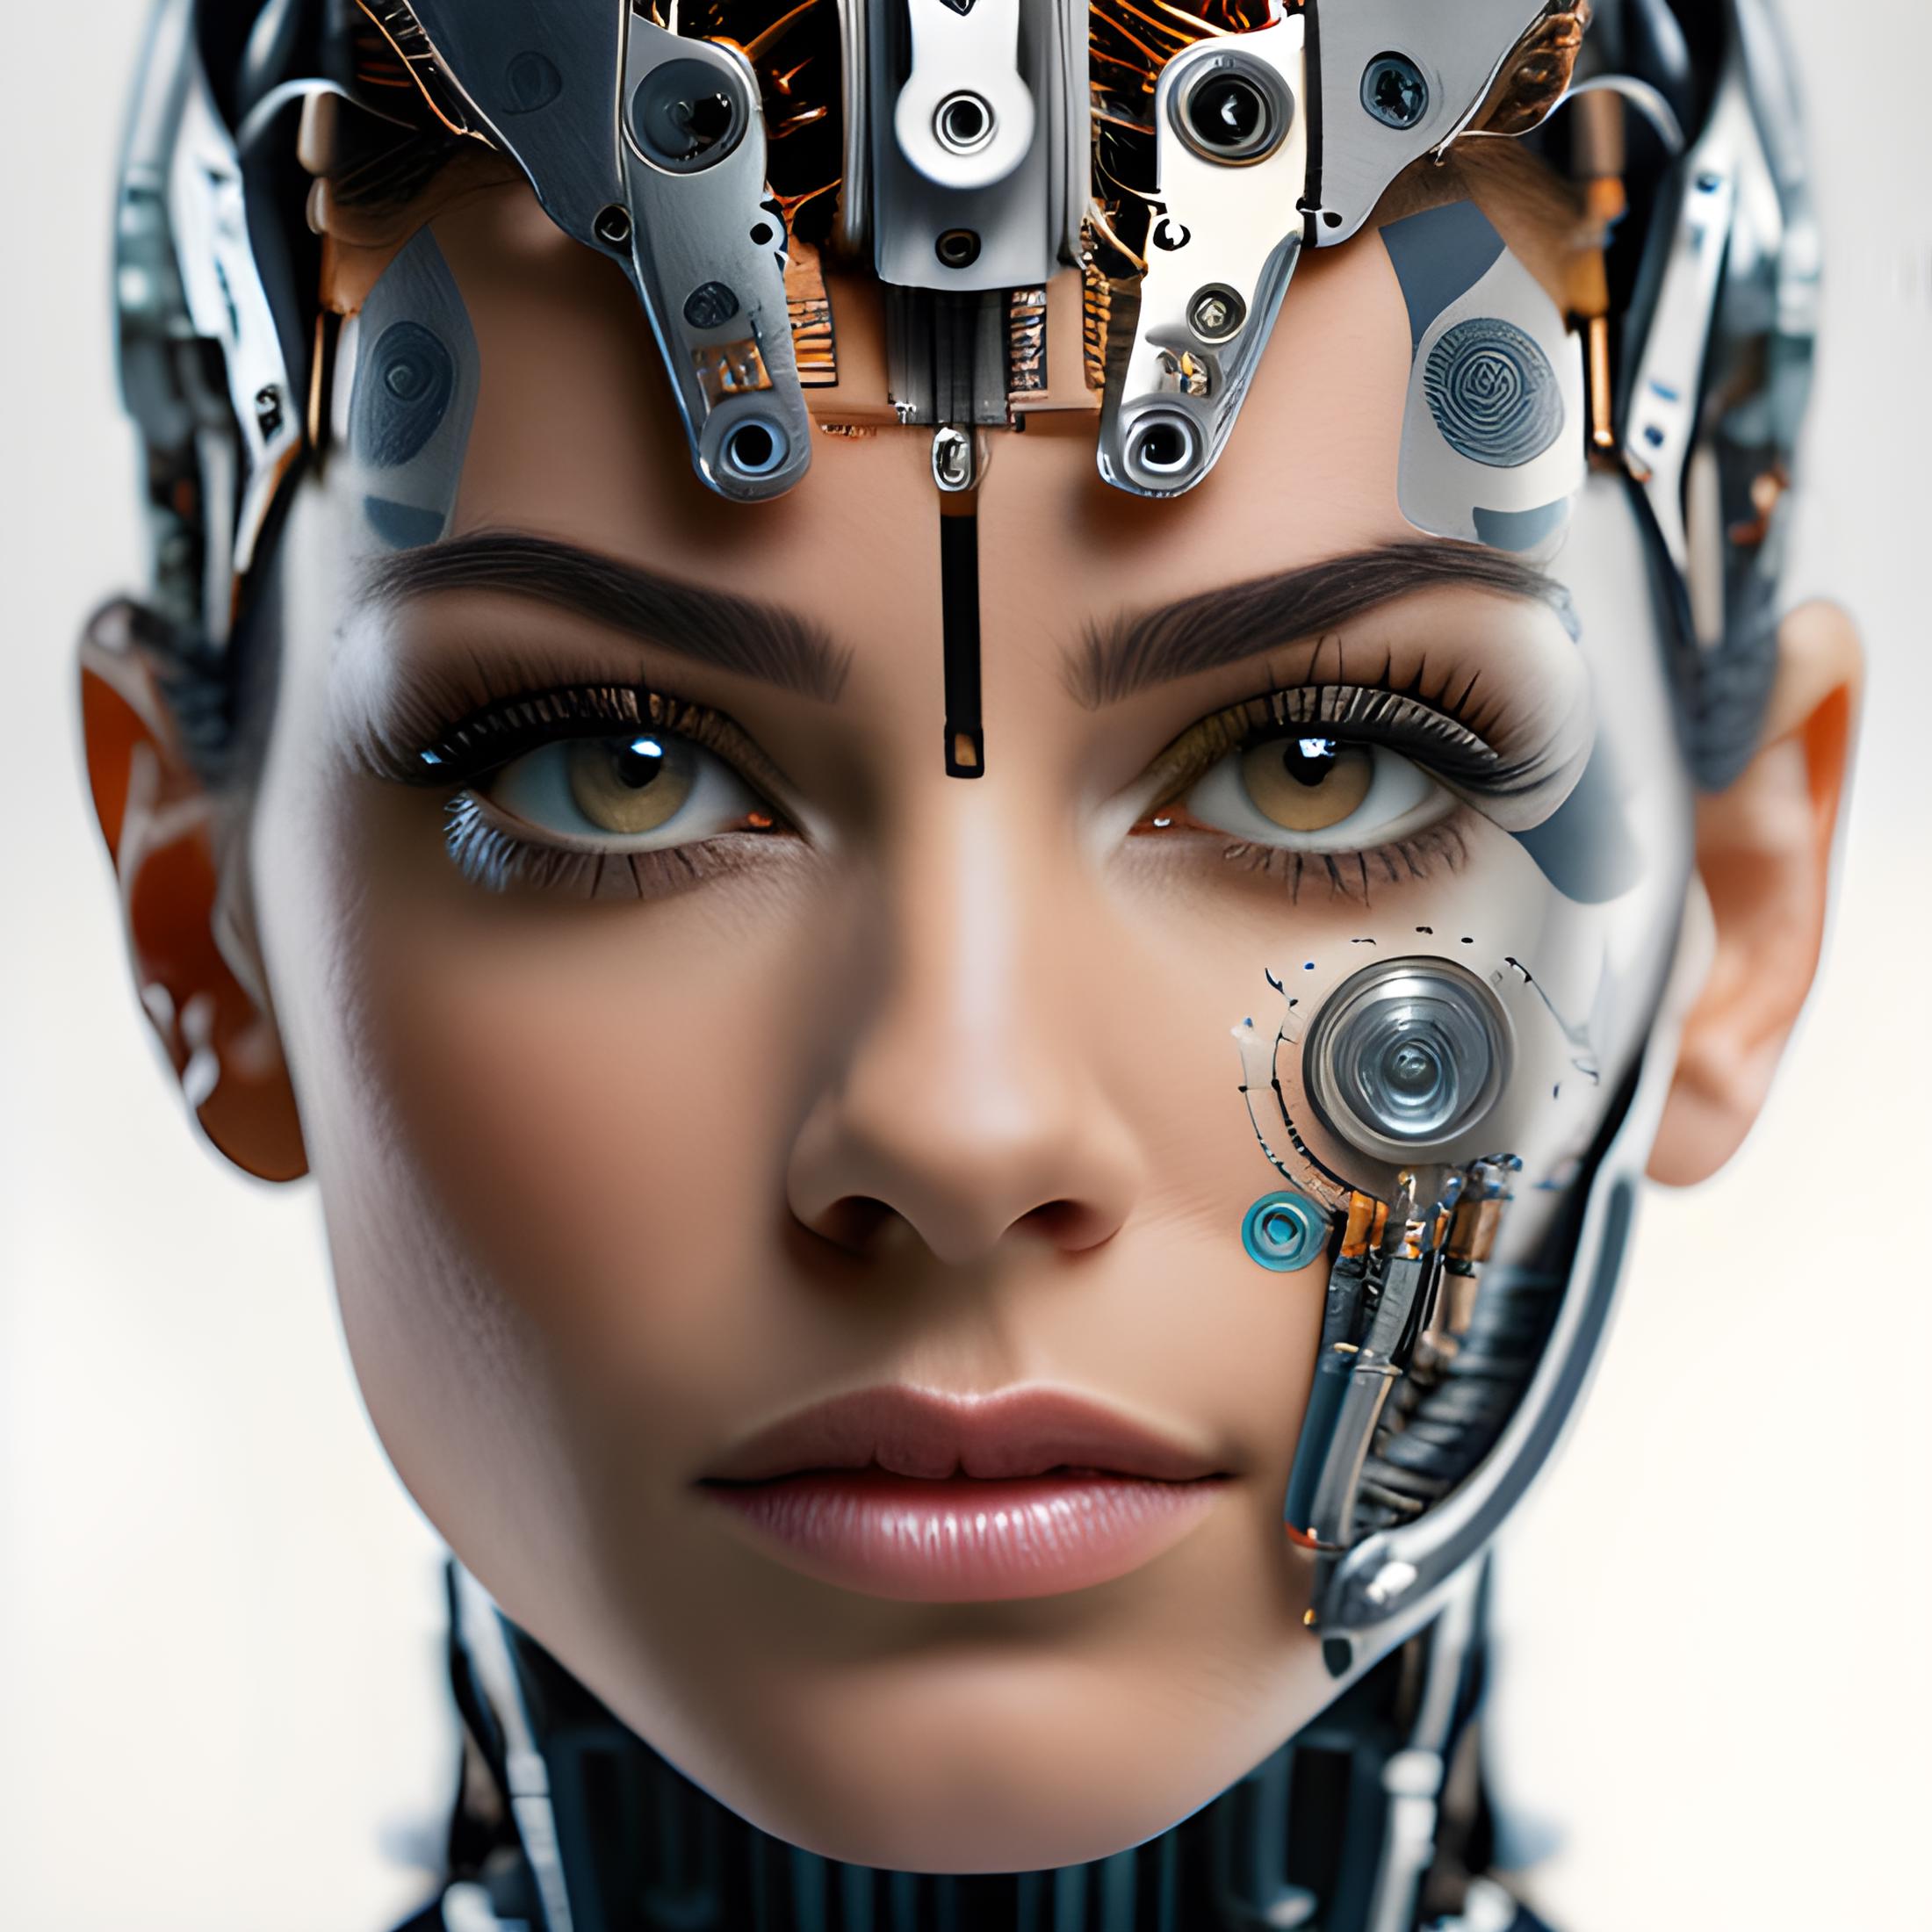 AI model image by josephus_k